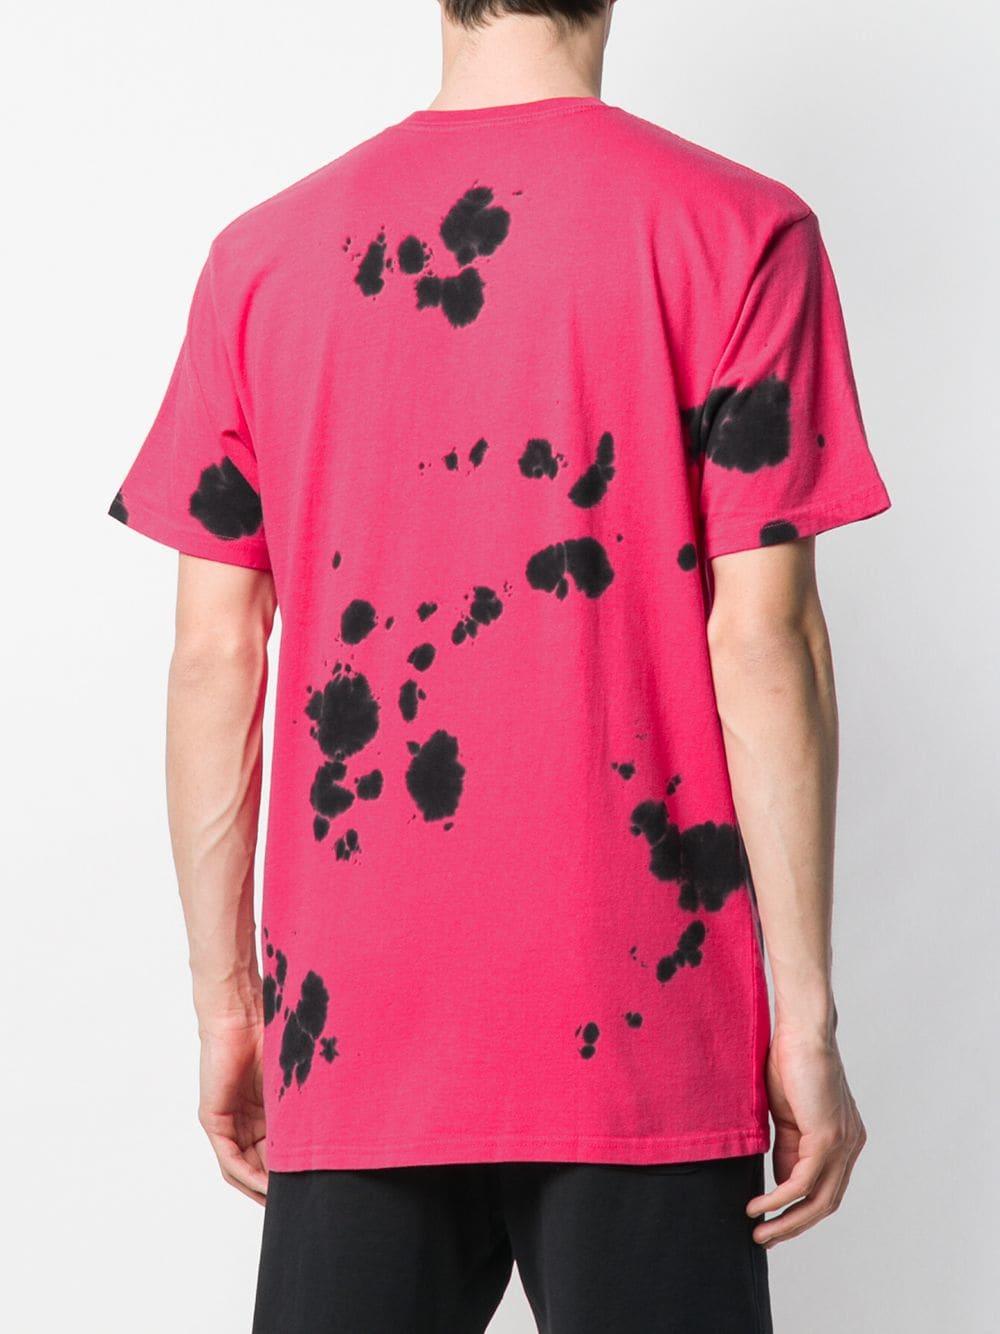 Vans Cotton Tie-dye Effect T-shirt in Pink for Men - Lyst